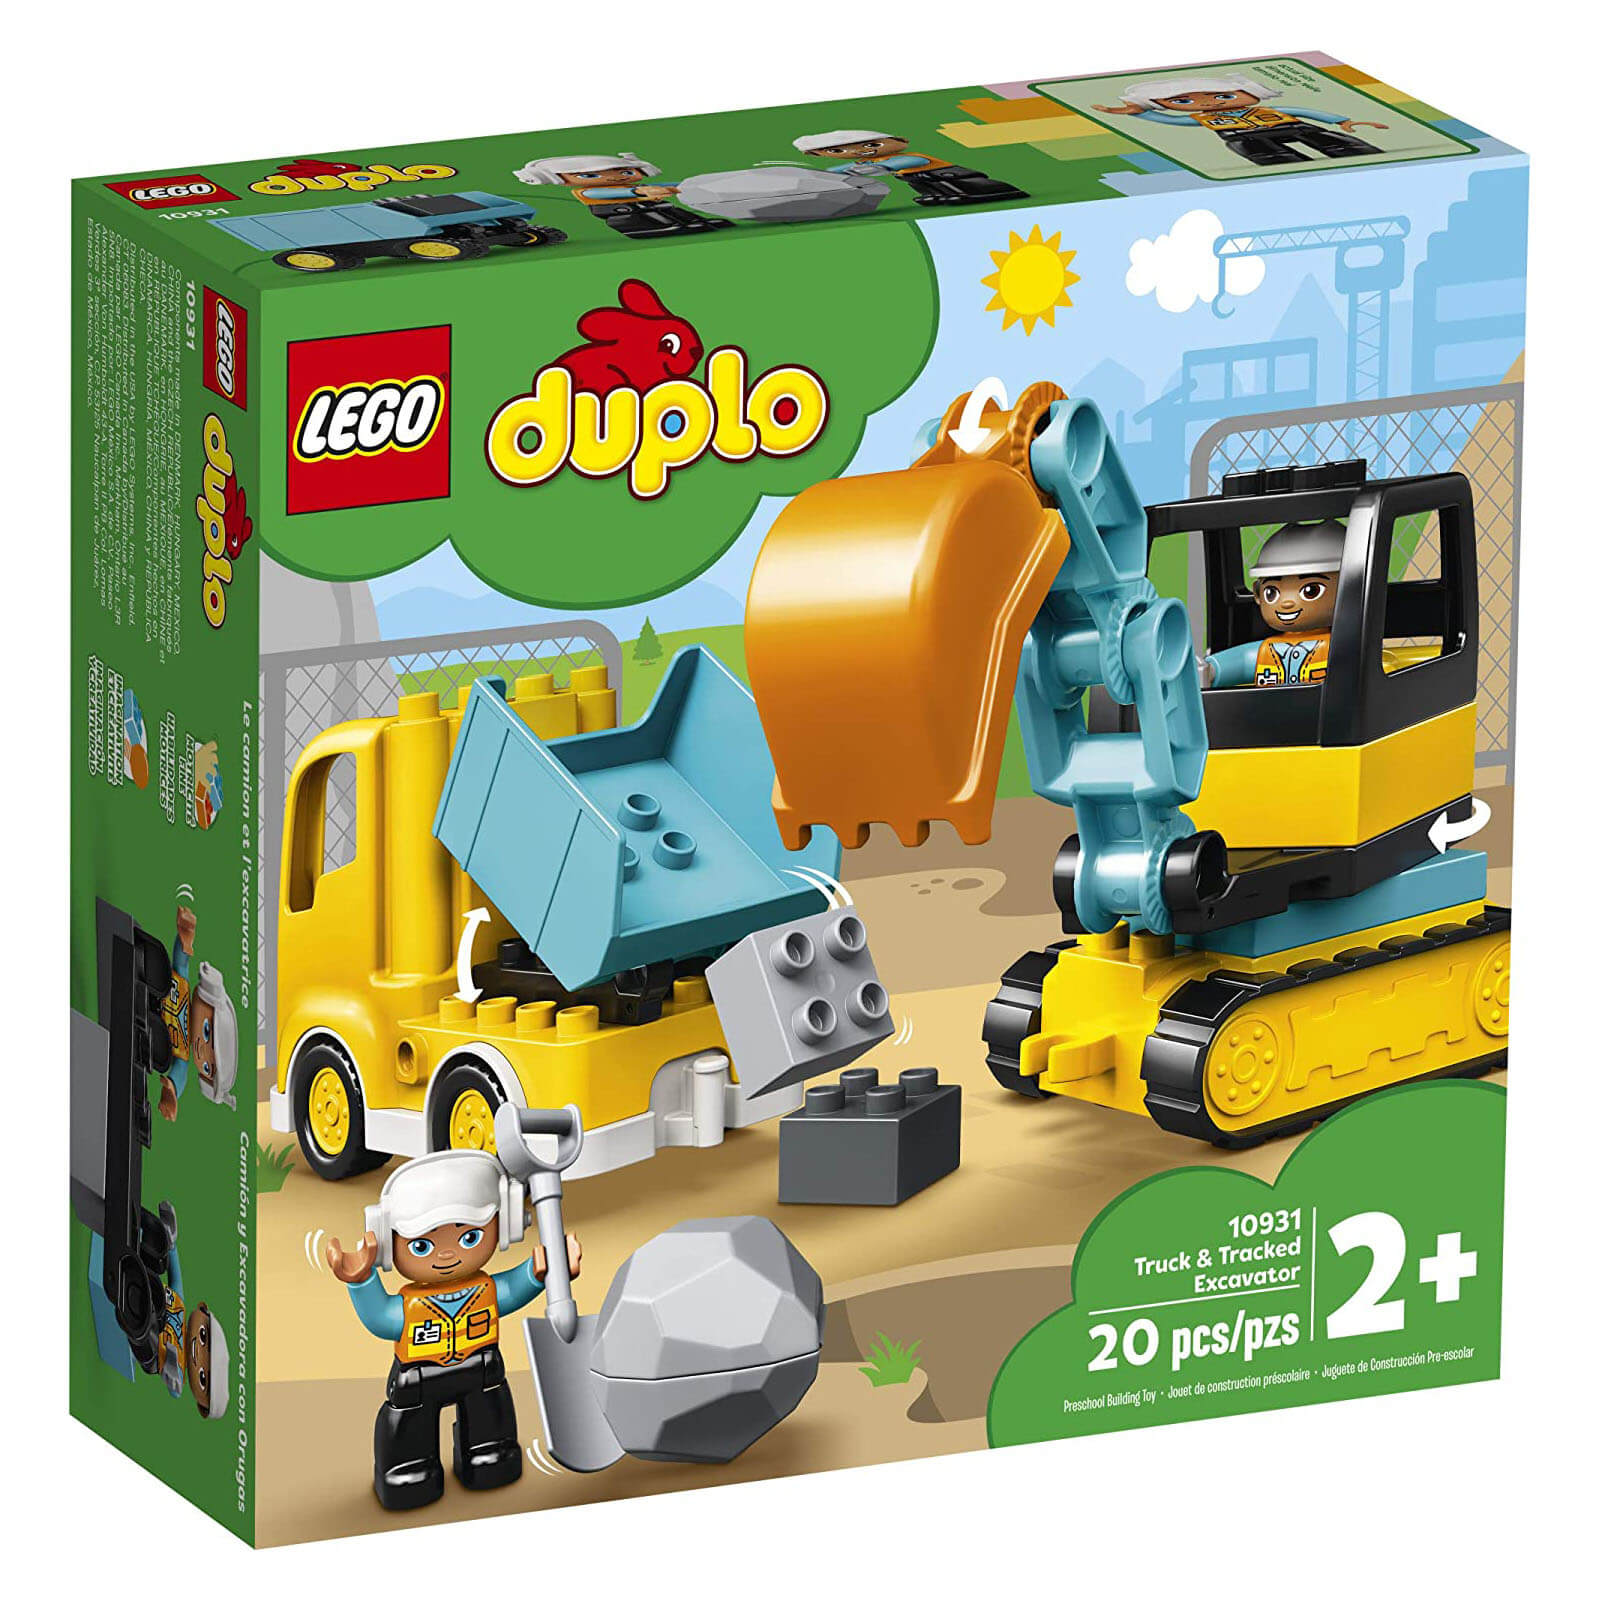 LEGO DUPLO Town Truck & Tracked Excavator 20 Piece Building Set (10931)